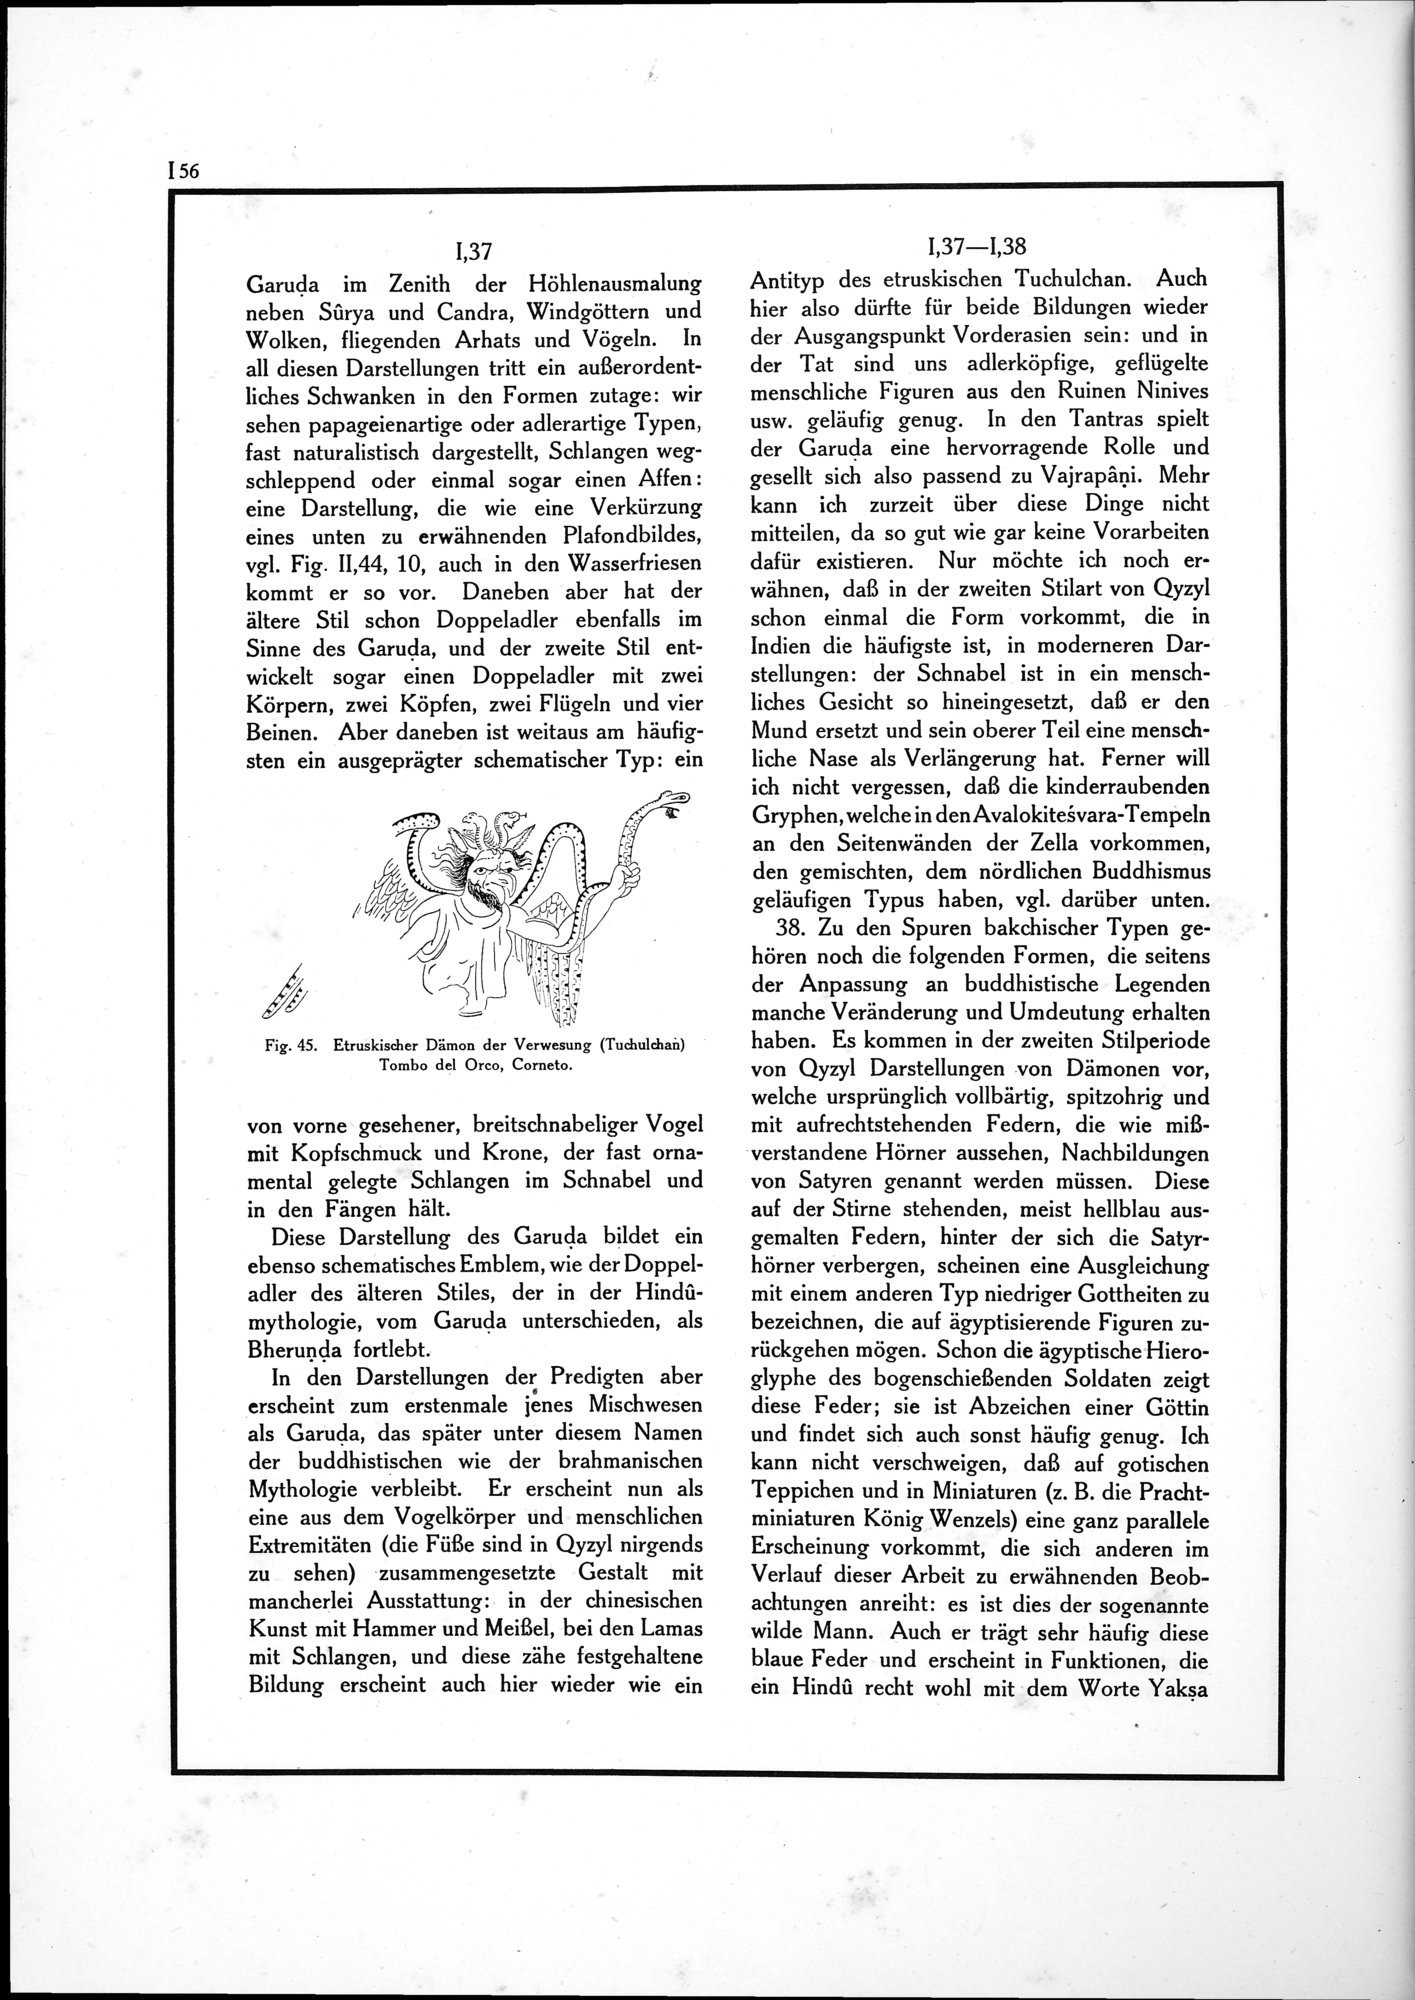 Alt-Kutscha : vol.1 / Page 68 (Grayscale High Resolution Image)